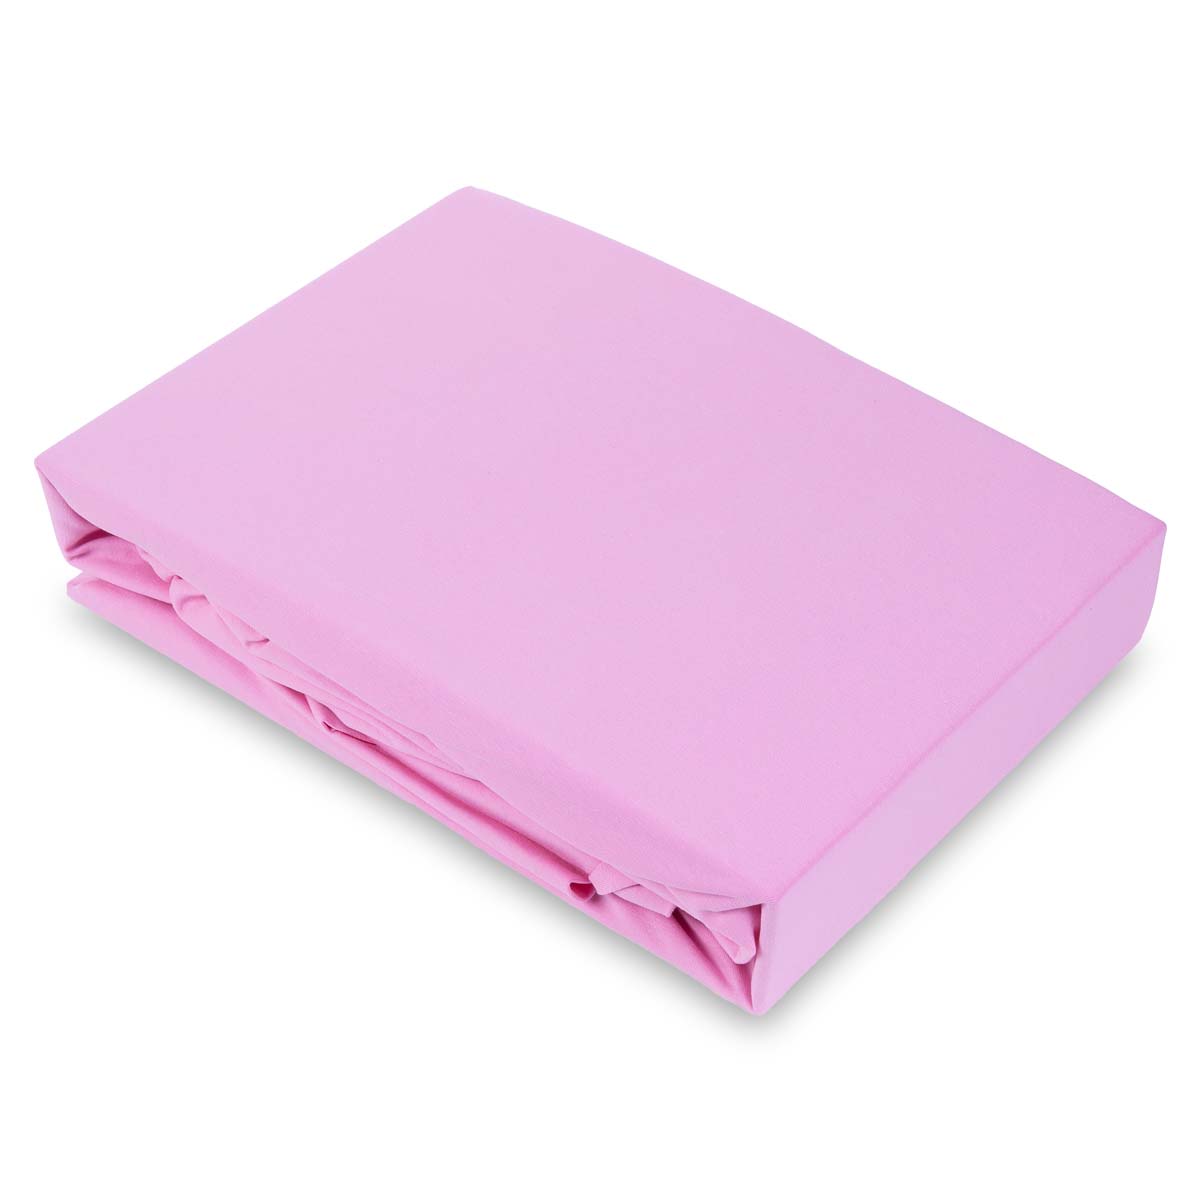 Простыня натяжная 2-спальная Pappel 180x220см, цвет розовый Pappel 180220-35/Pink 11